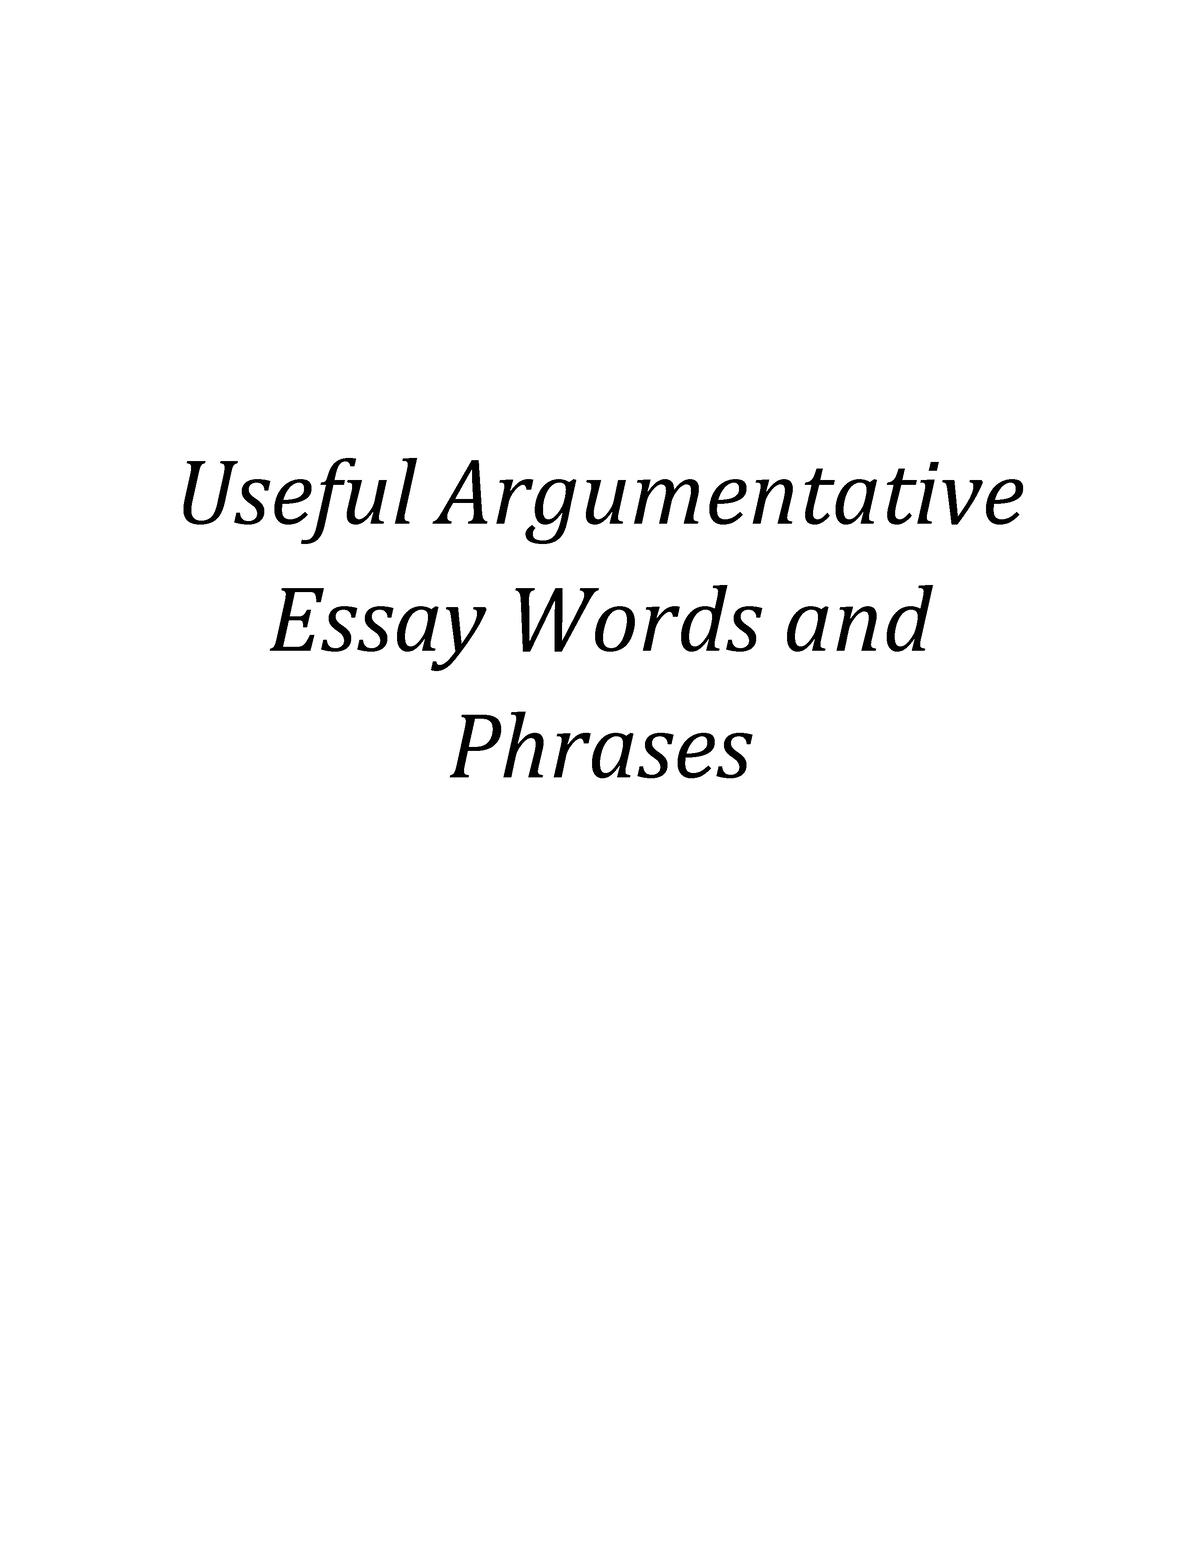 argumentative text useful phrases